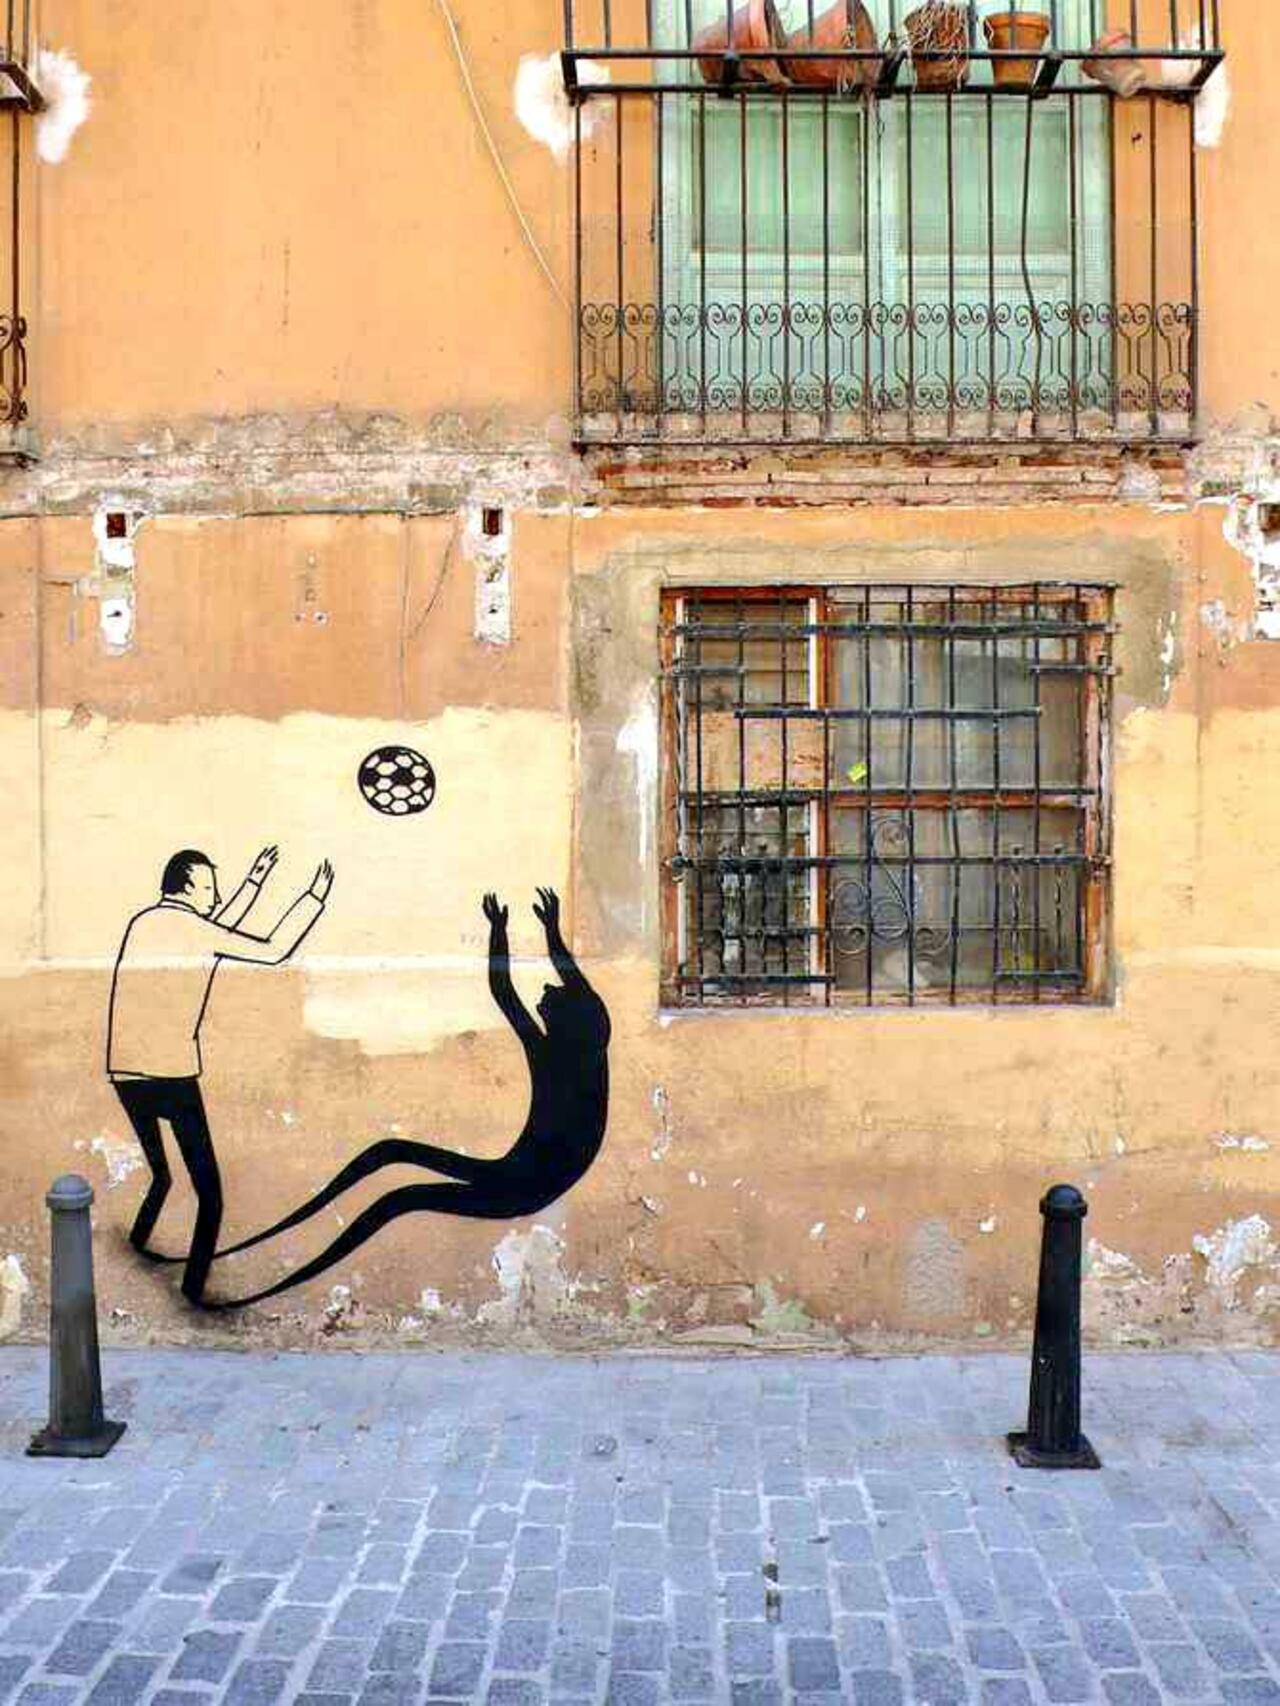 Spanish artist Escif 
#StreetArt #art #graffiti #urbanart http://t.co/9NbjtCNlEW